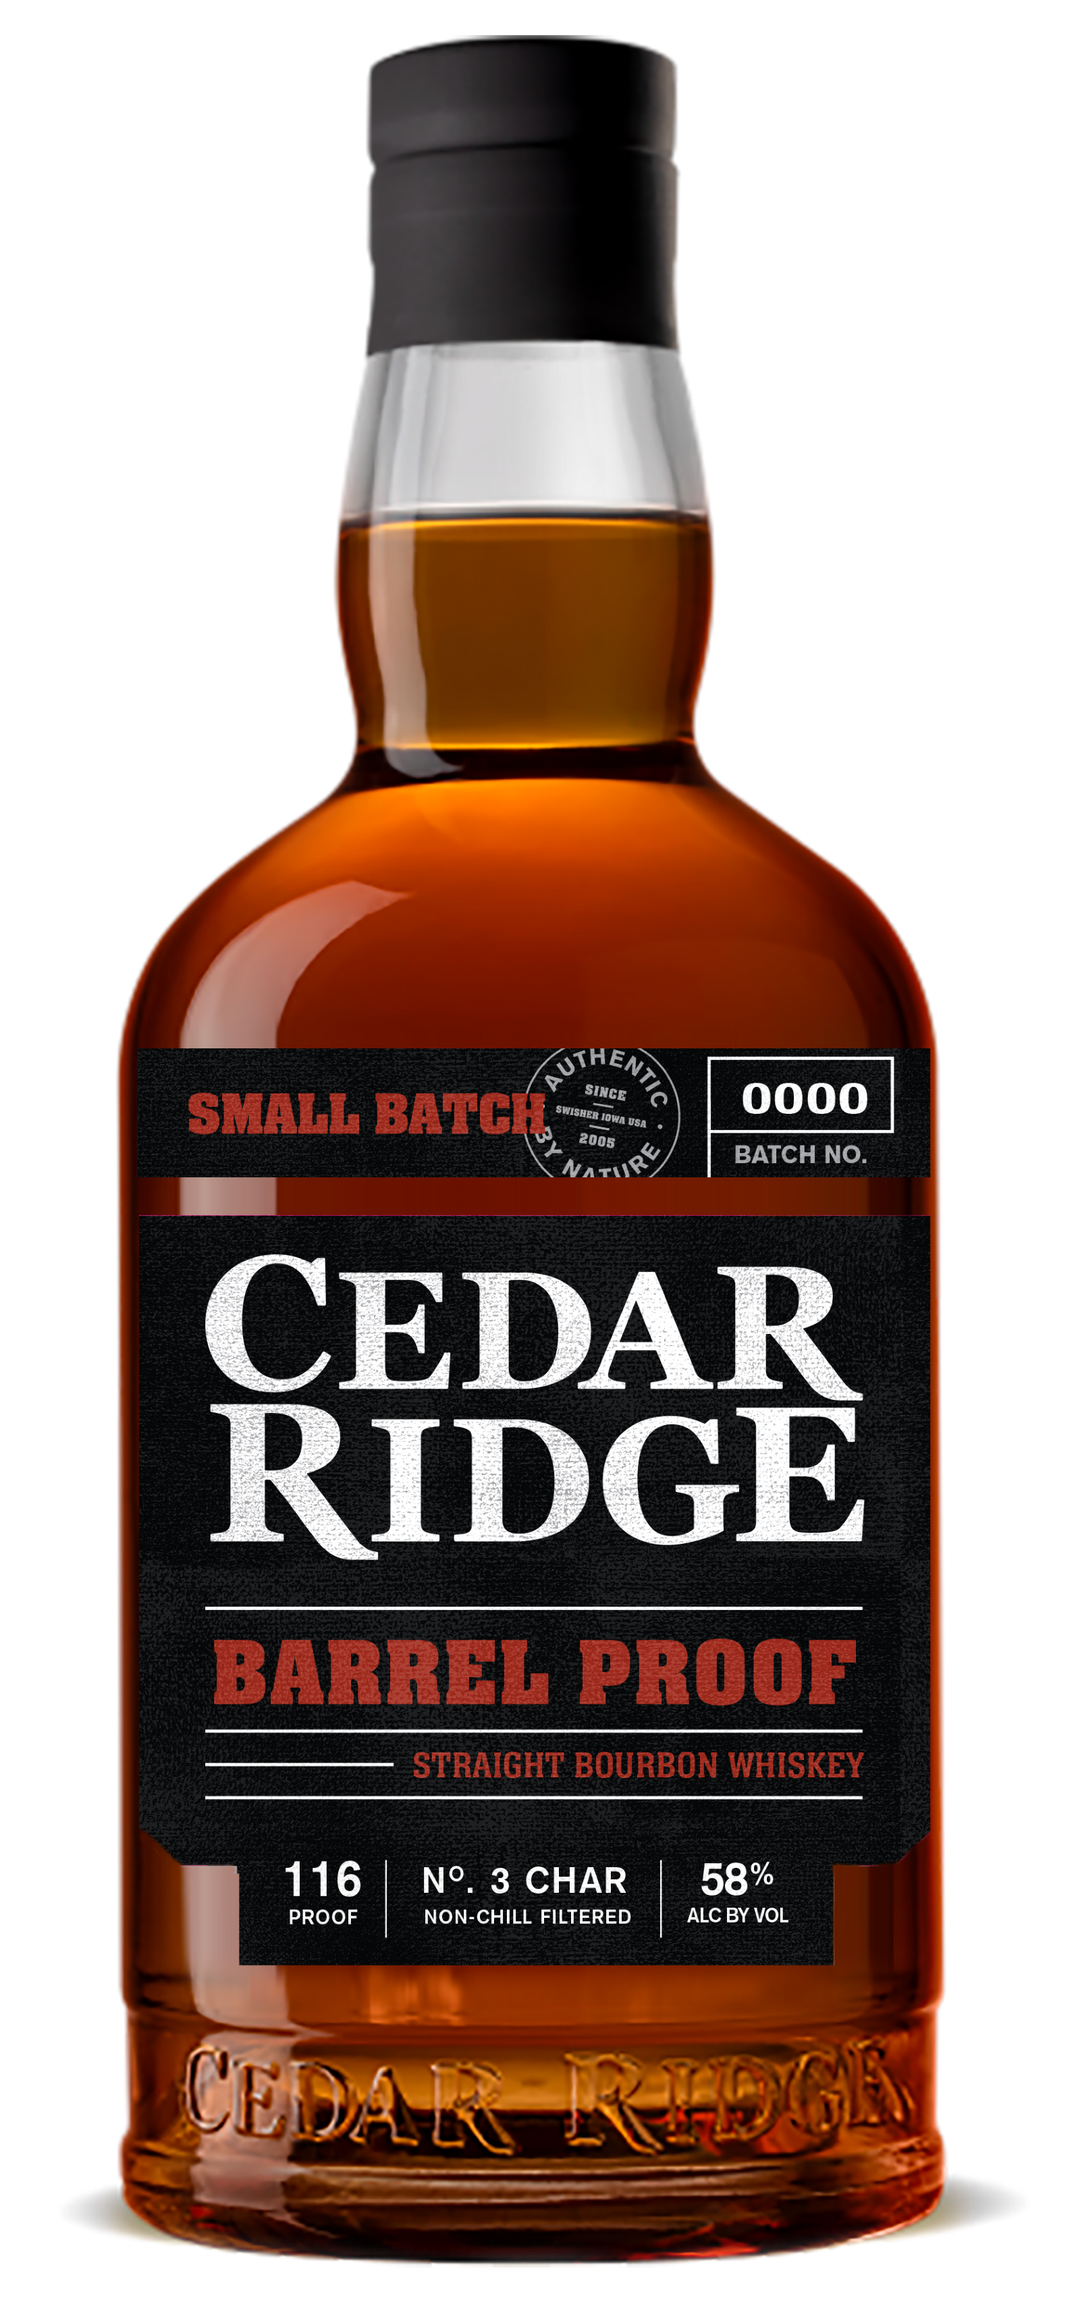 Cedar Ridge Barrel Proof Straight Bourbon